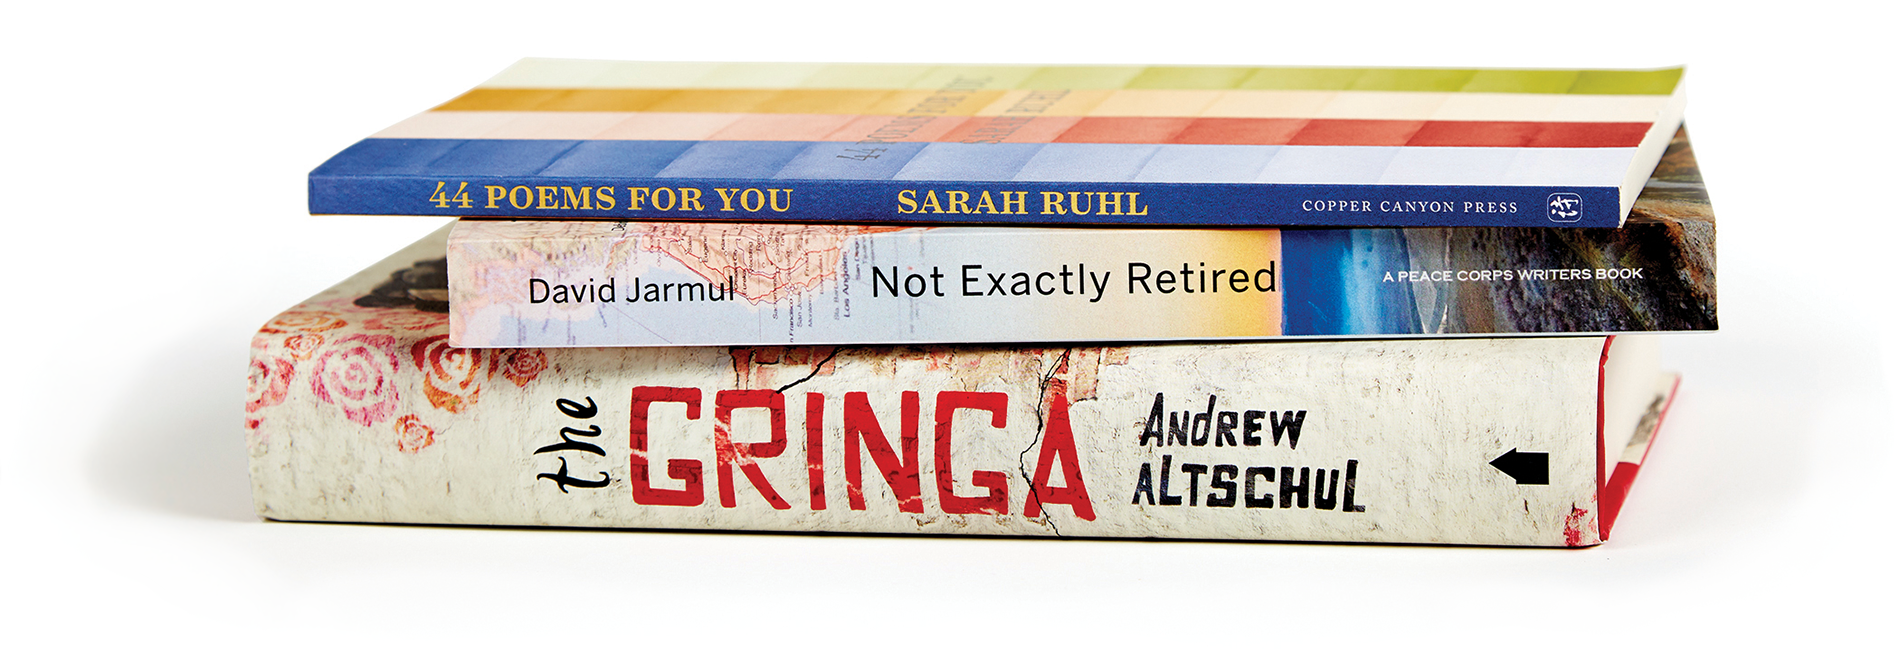 Books by Sarah Ruhl, David Jarmul, and Andrew Altschul